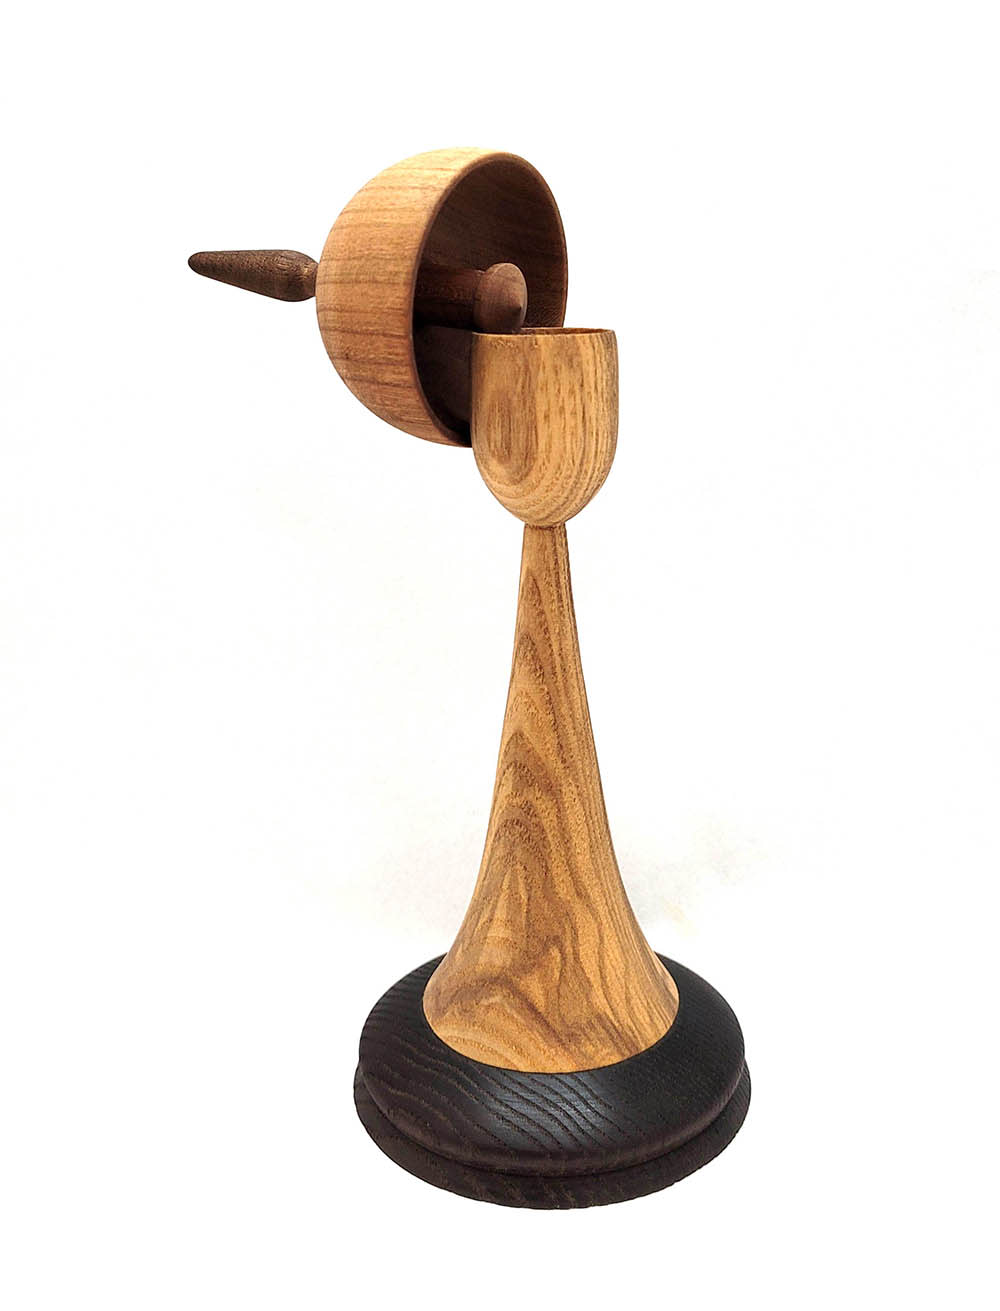 Kade Bolger, beautiful wooden objects